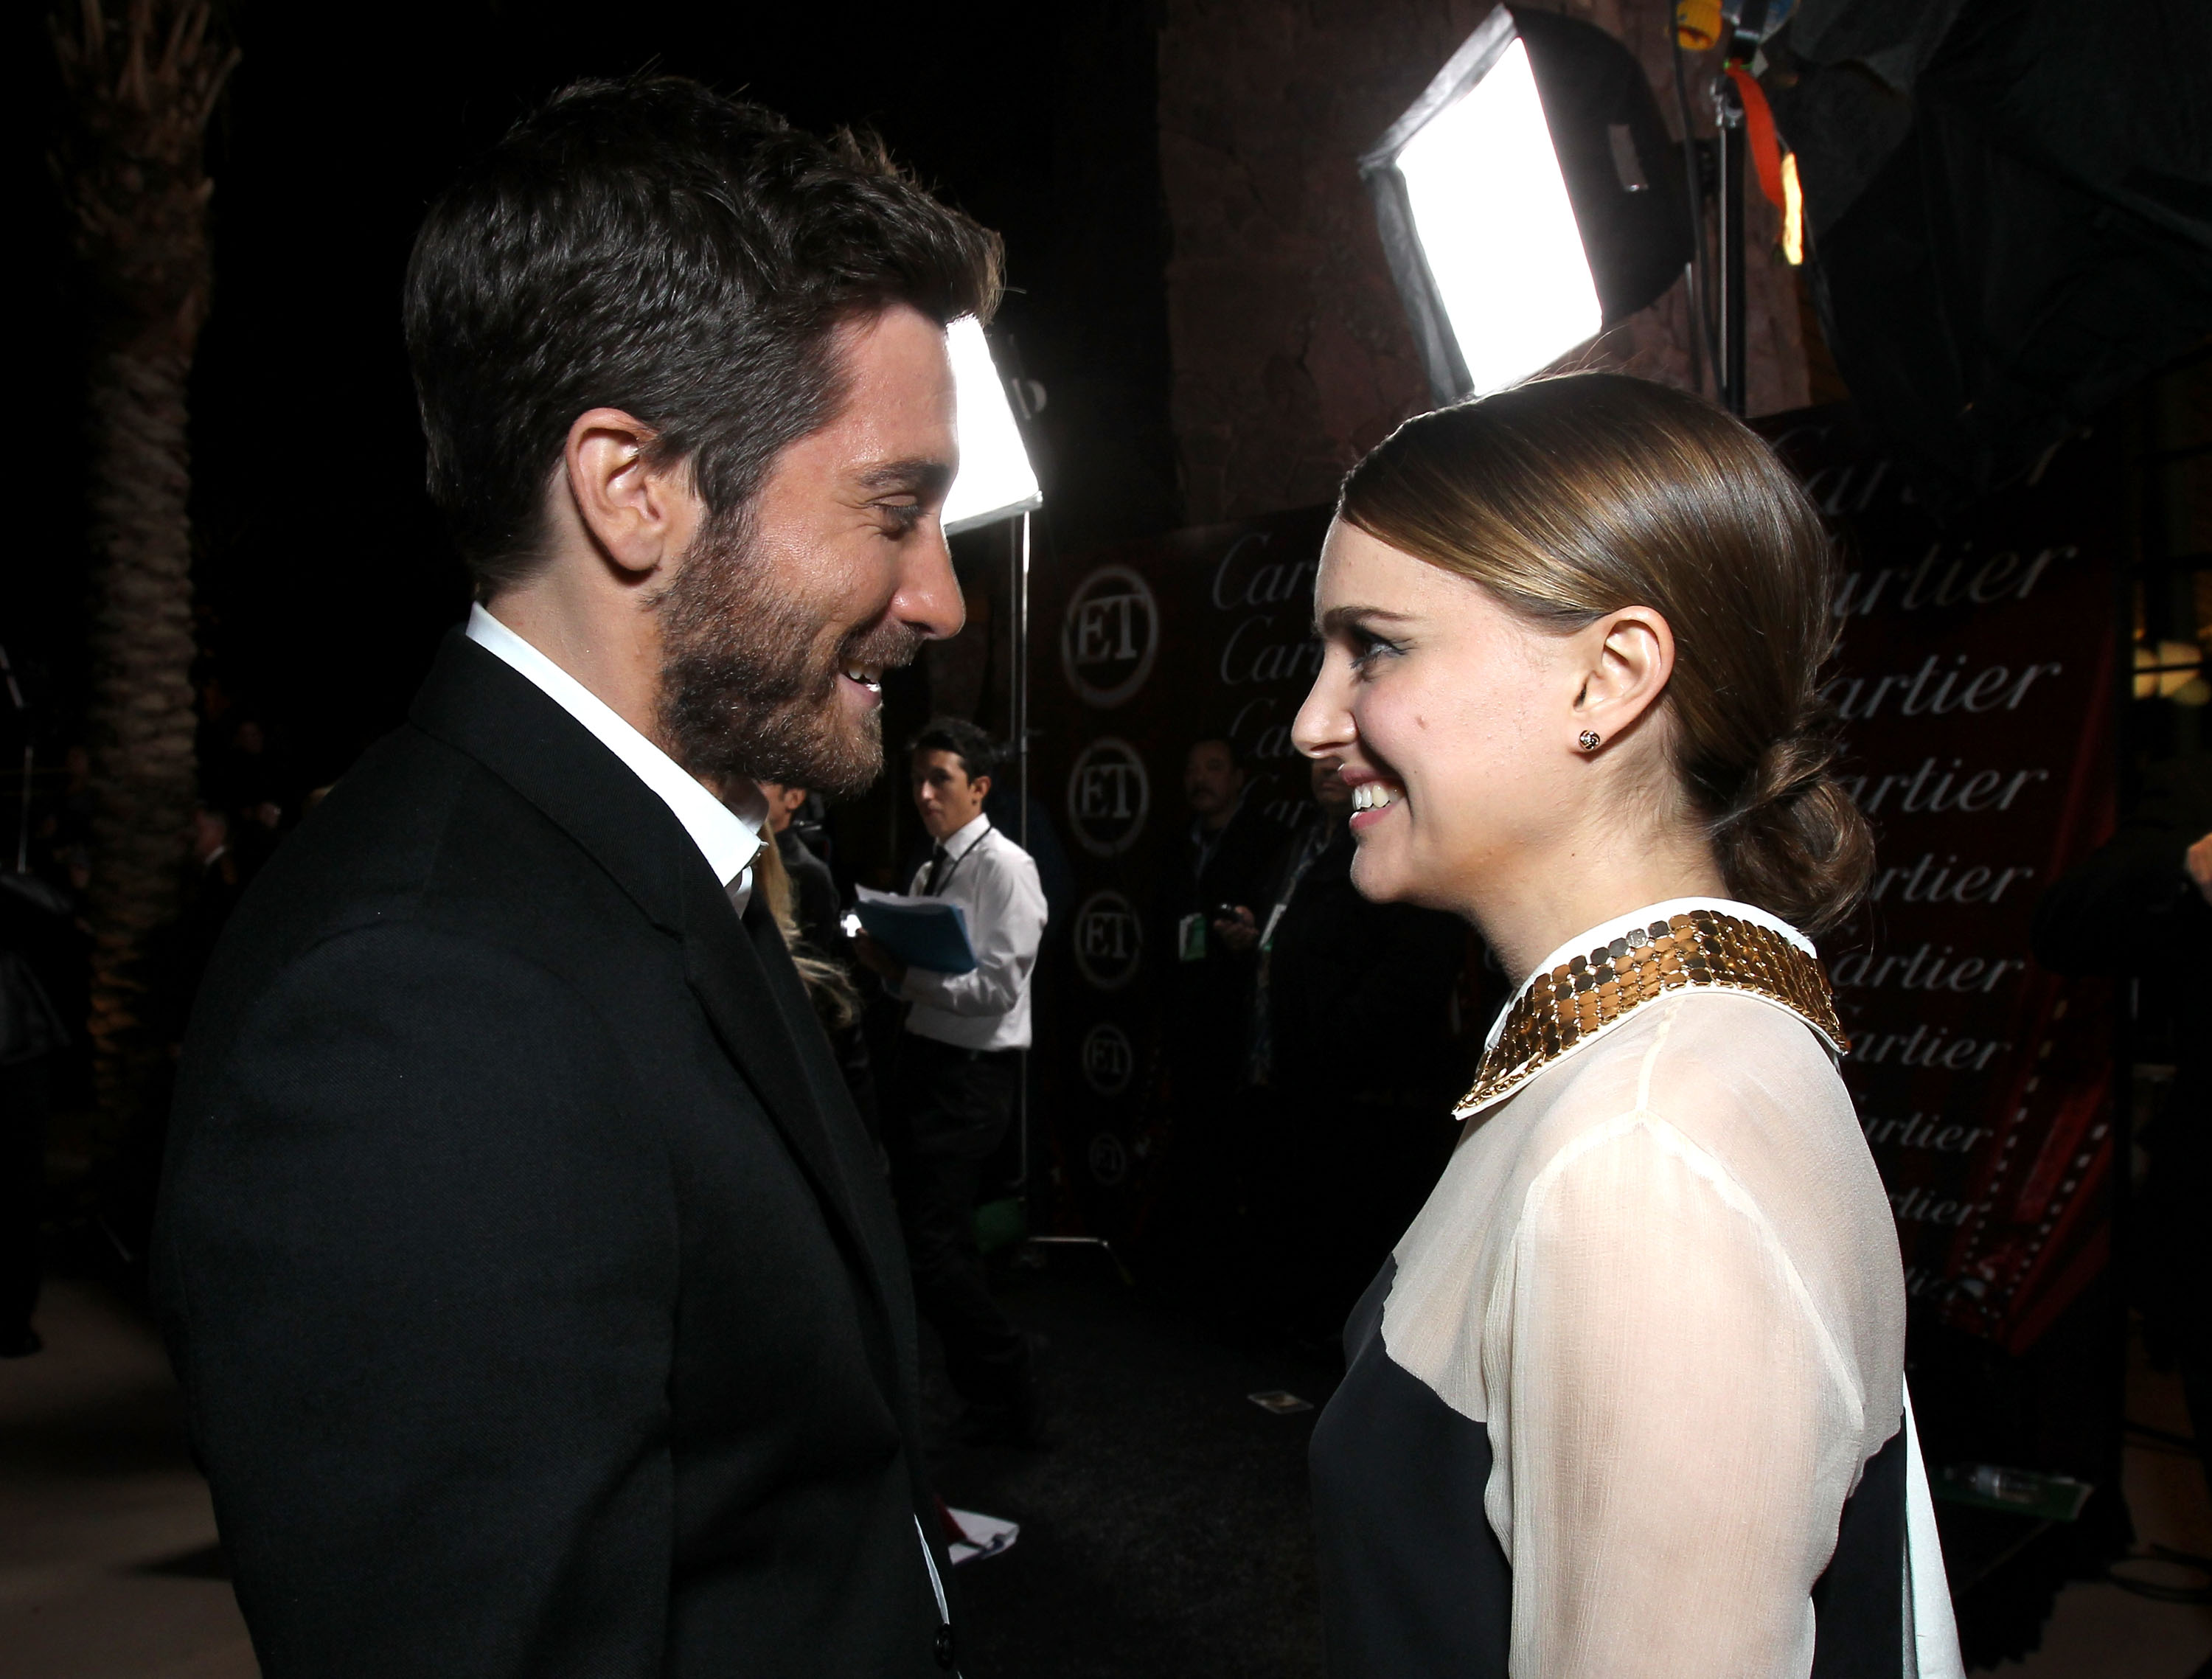 In 2006, Jake Gyllenhaal and Natalie Portman were seen on a few dates